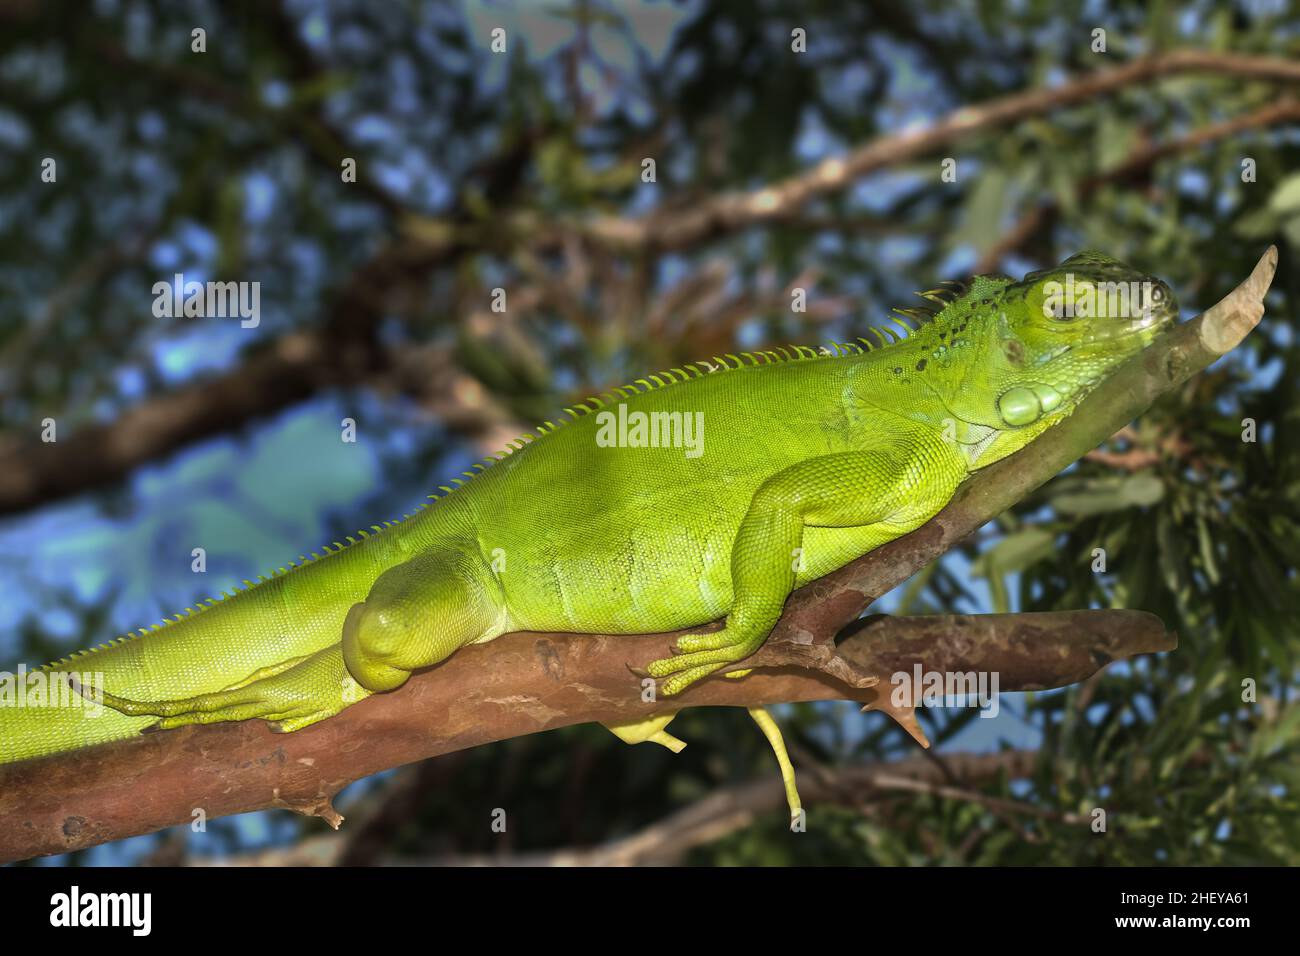 Iguana on the tree branch Stock Photo